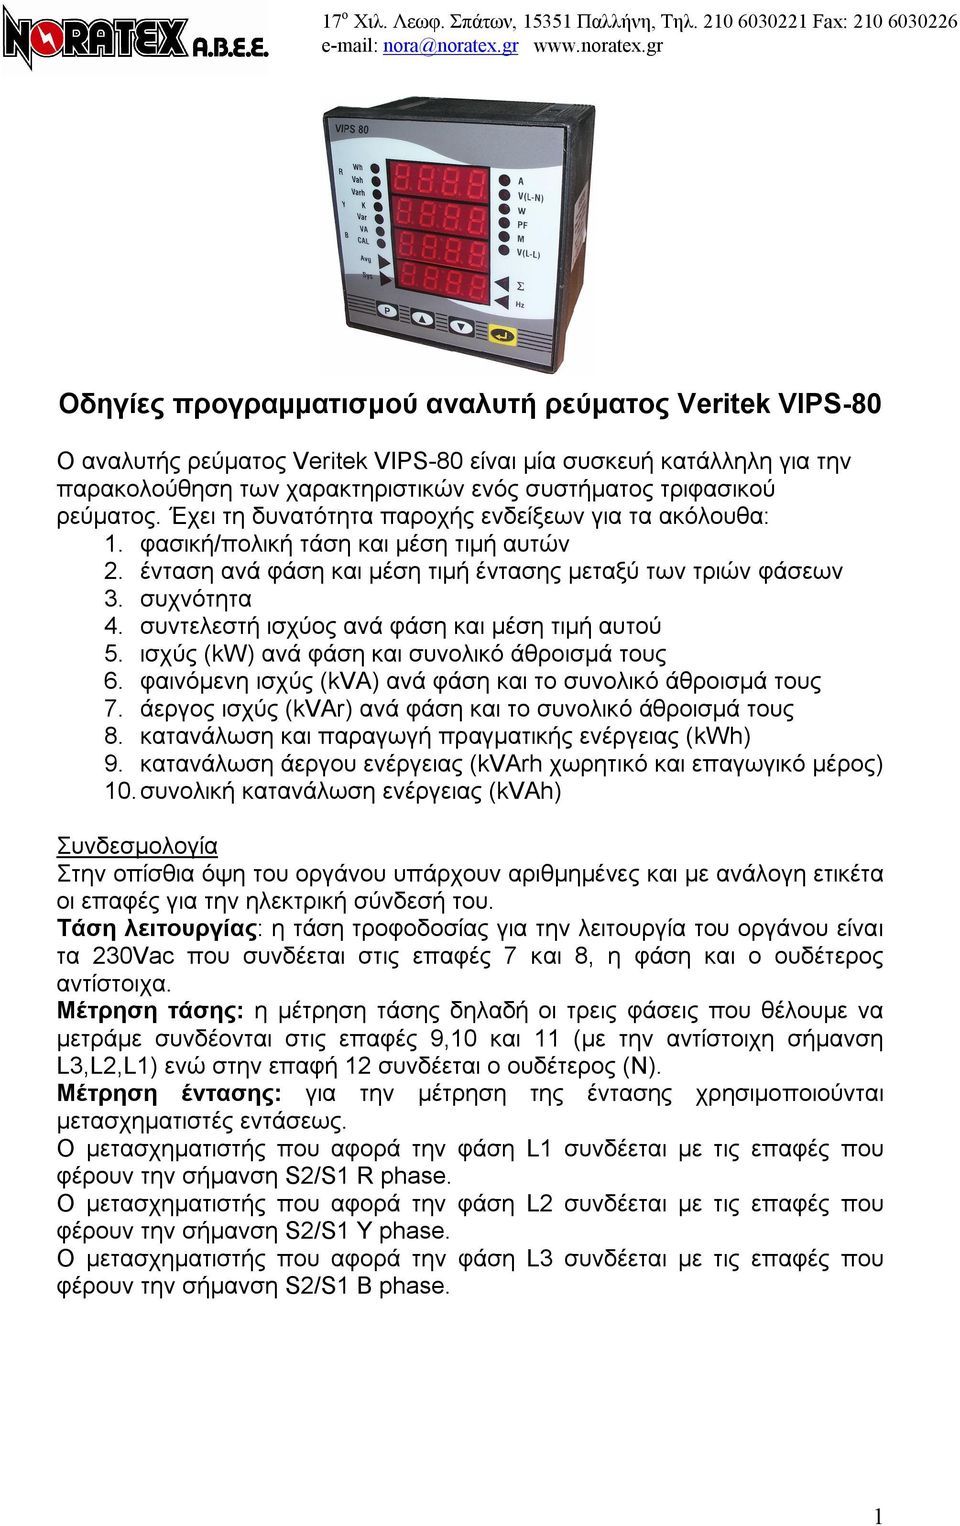 gr Οδηγίες προγραμματισμού αναλυτή ρεύματος Veritek VIPS-80 Ο αναλυτής ρεύματος Veritek VIPS-80 είναι μία συσκευή κατάλληλη για την παρακολούθηση των χαρακτηριστικών ενός συστήματος τριφασικού